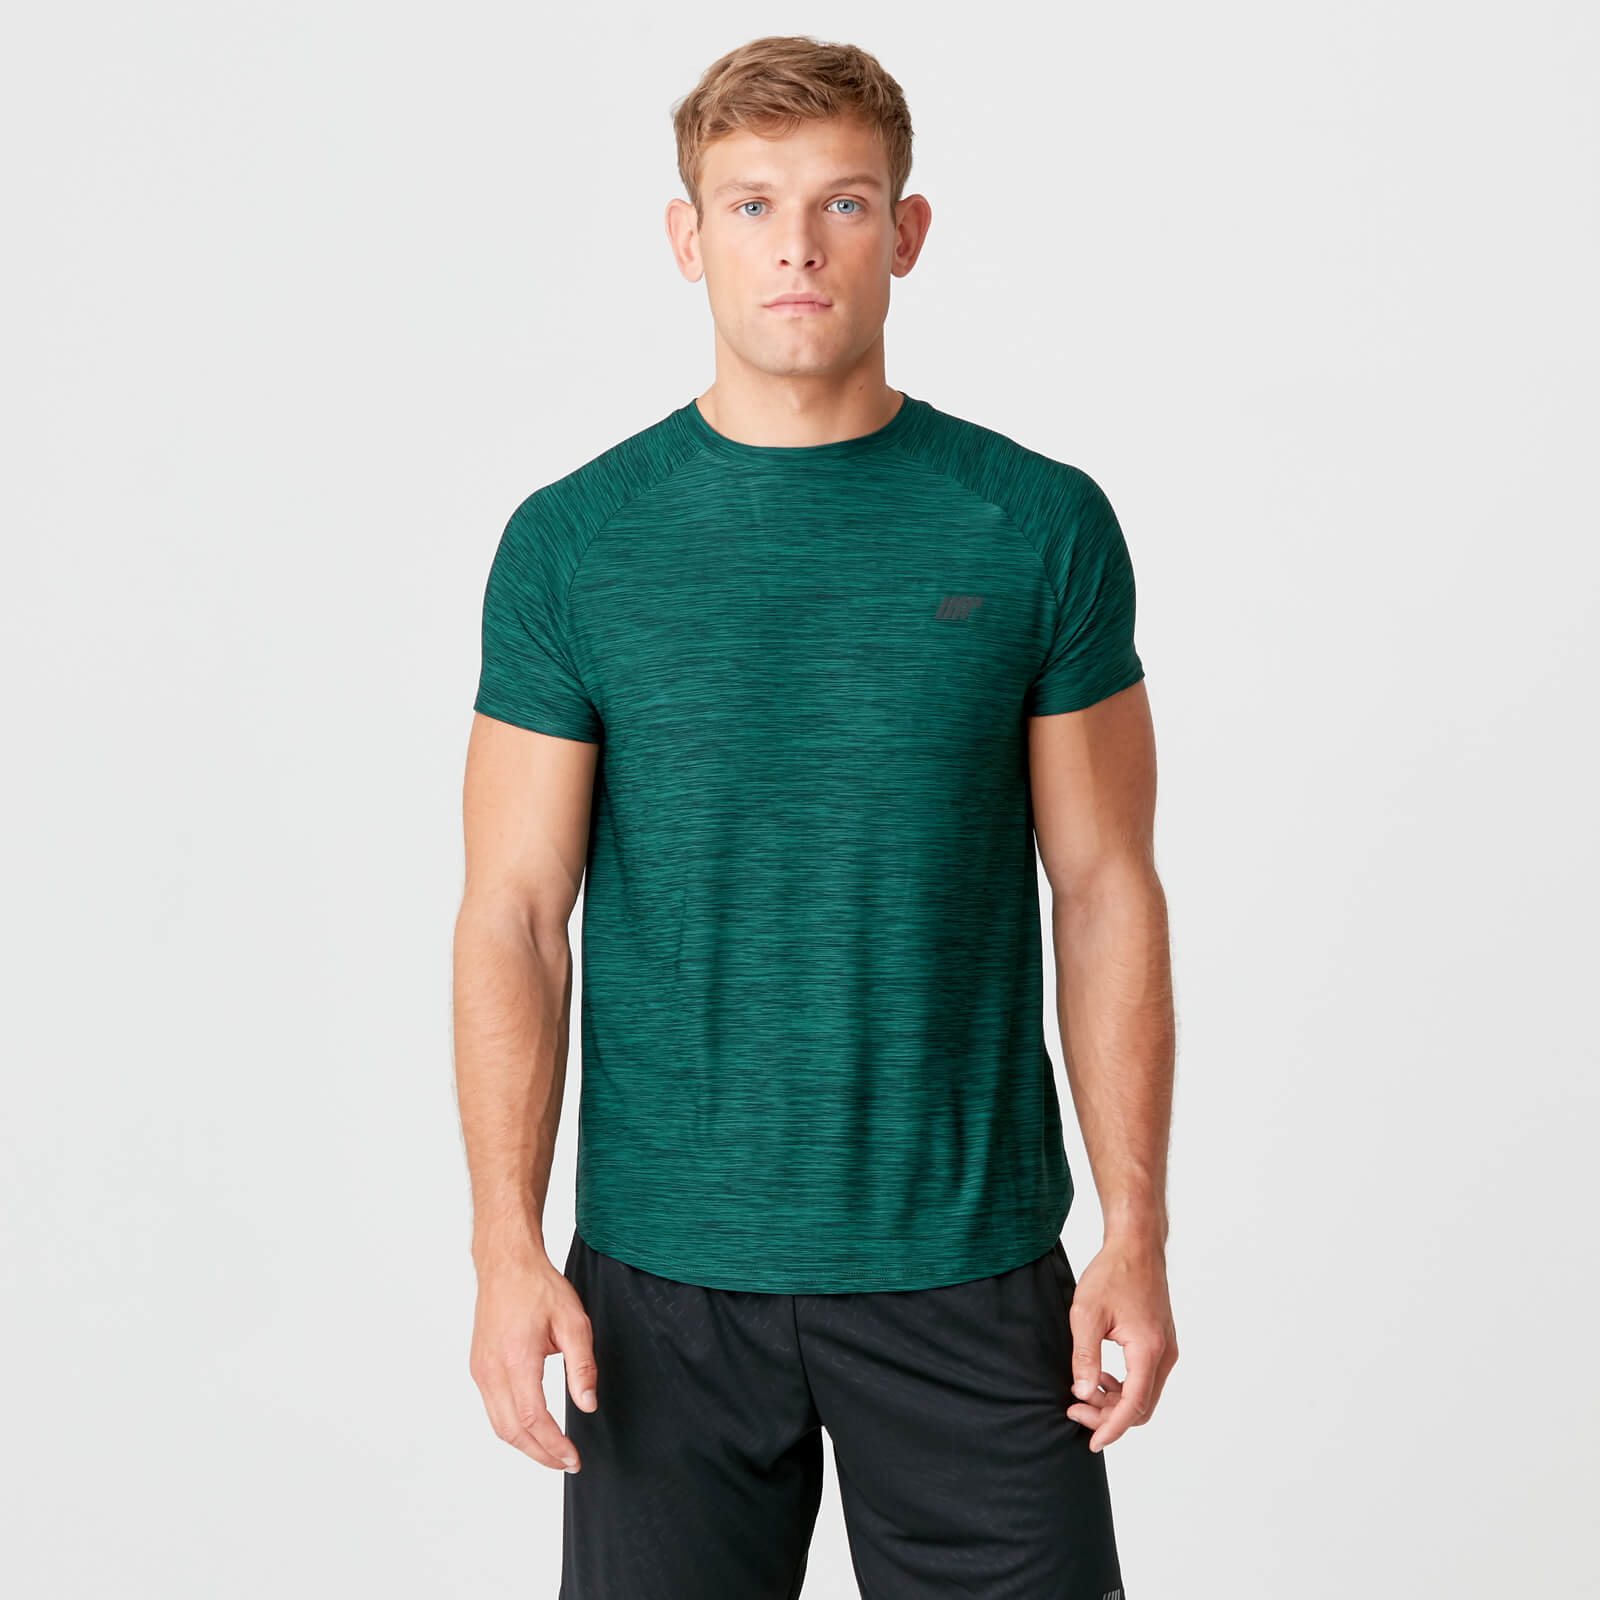 Dry Tech 速乾系列 男士運動健身T恤 - 深綠 - S